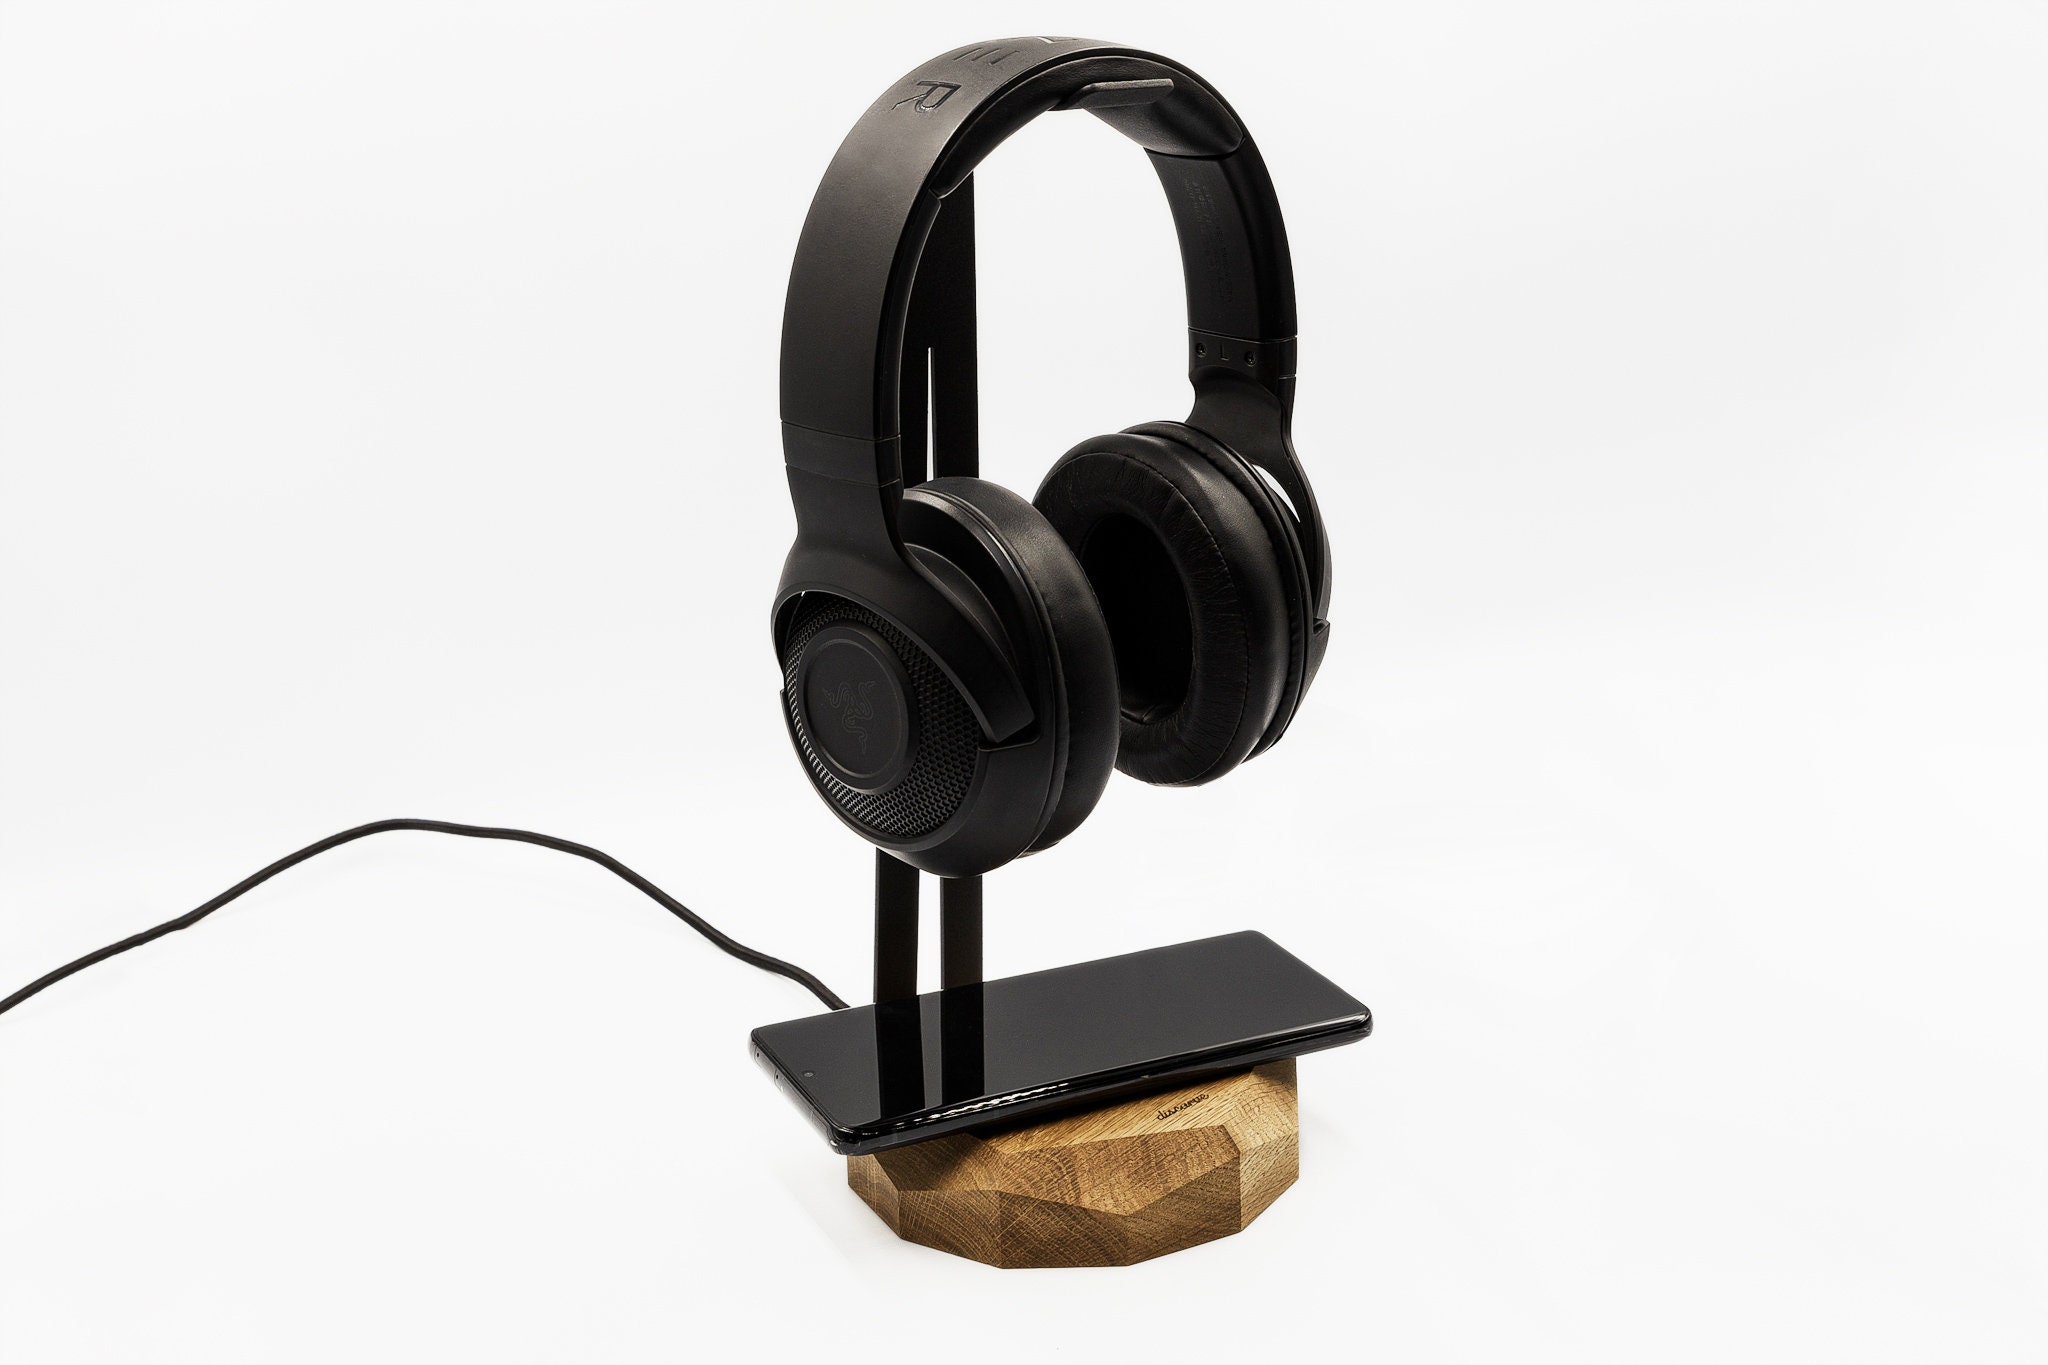 DIY Desk Sound Station Laser Cut Headphone Stand Wooden Headset